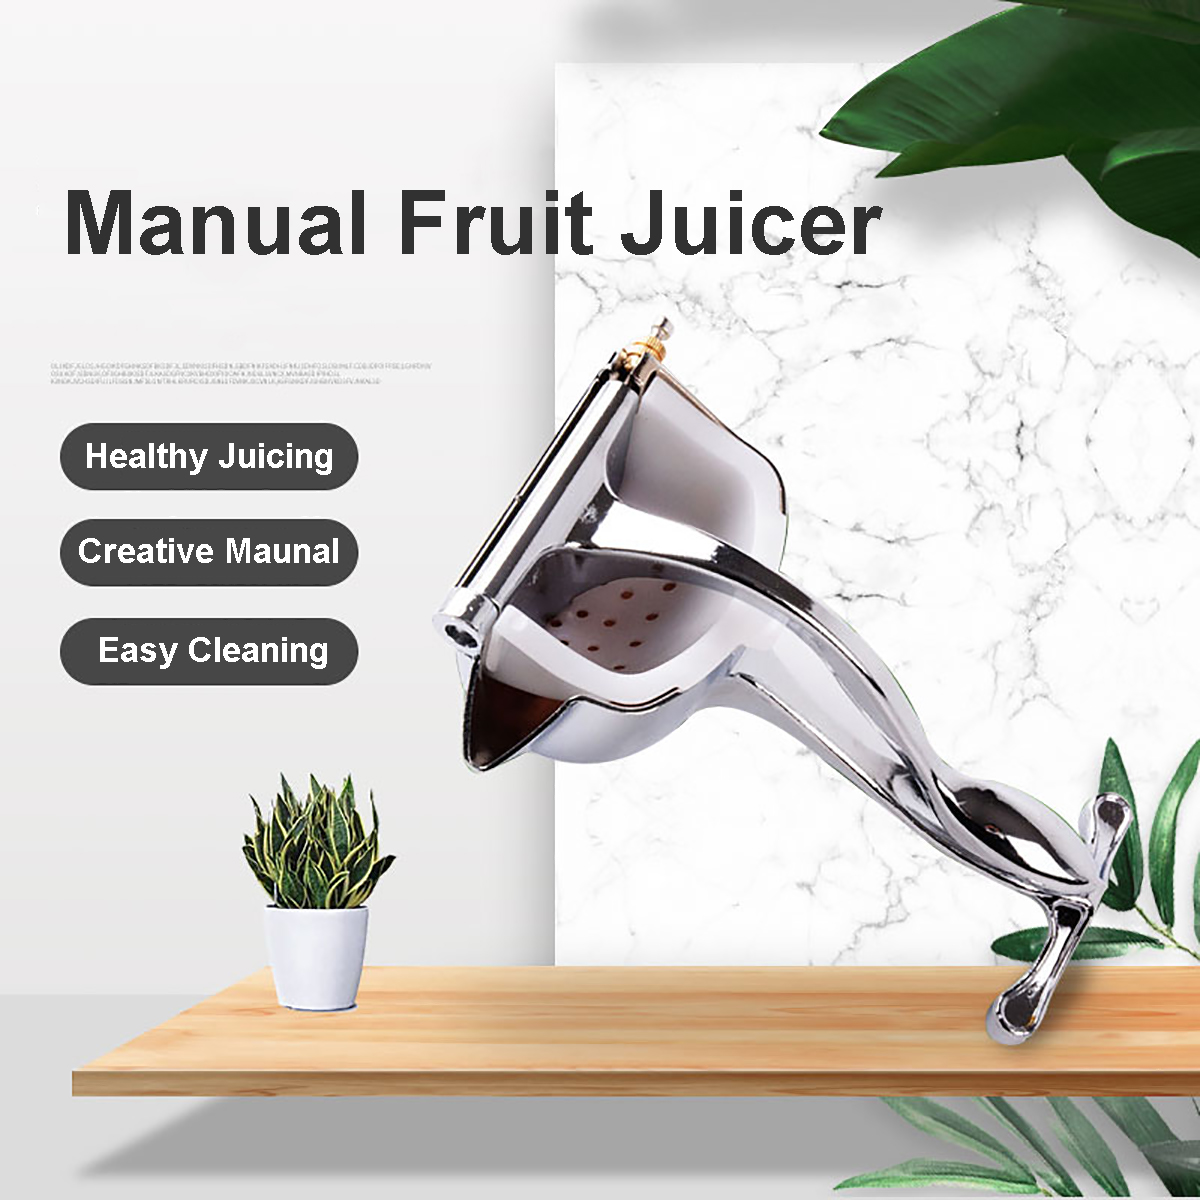 Manual Fruit Juicer Lemon Press Orange Squeezer Citrus Extractor Kitchen Tool